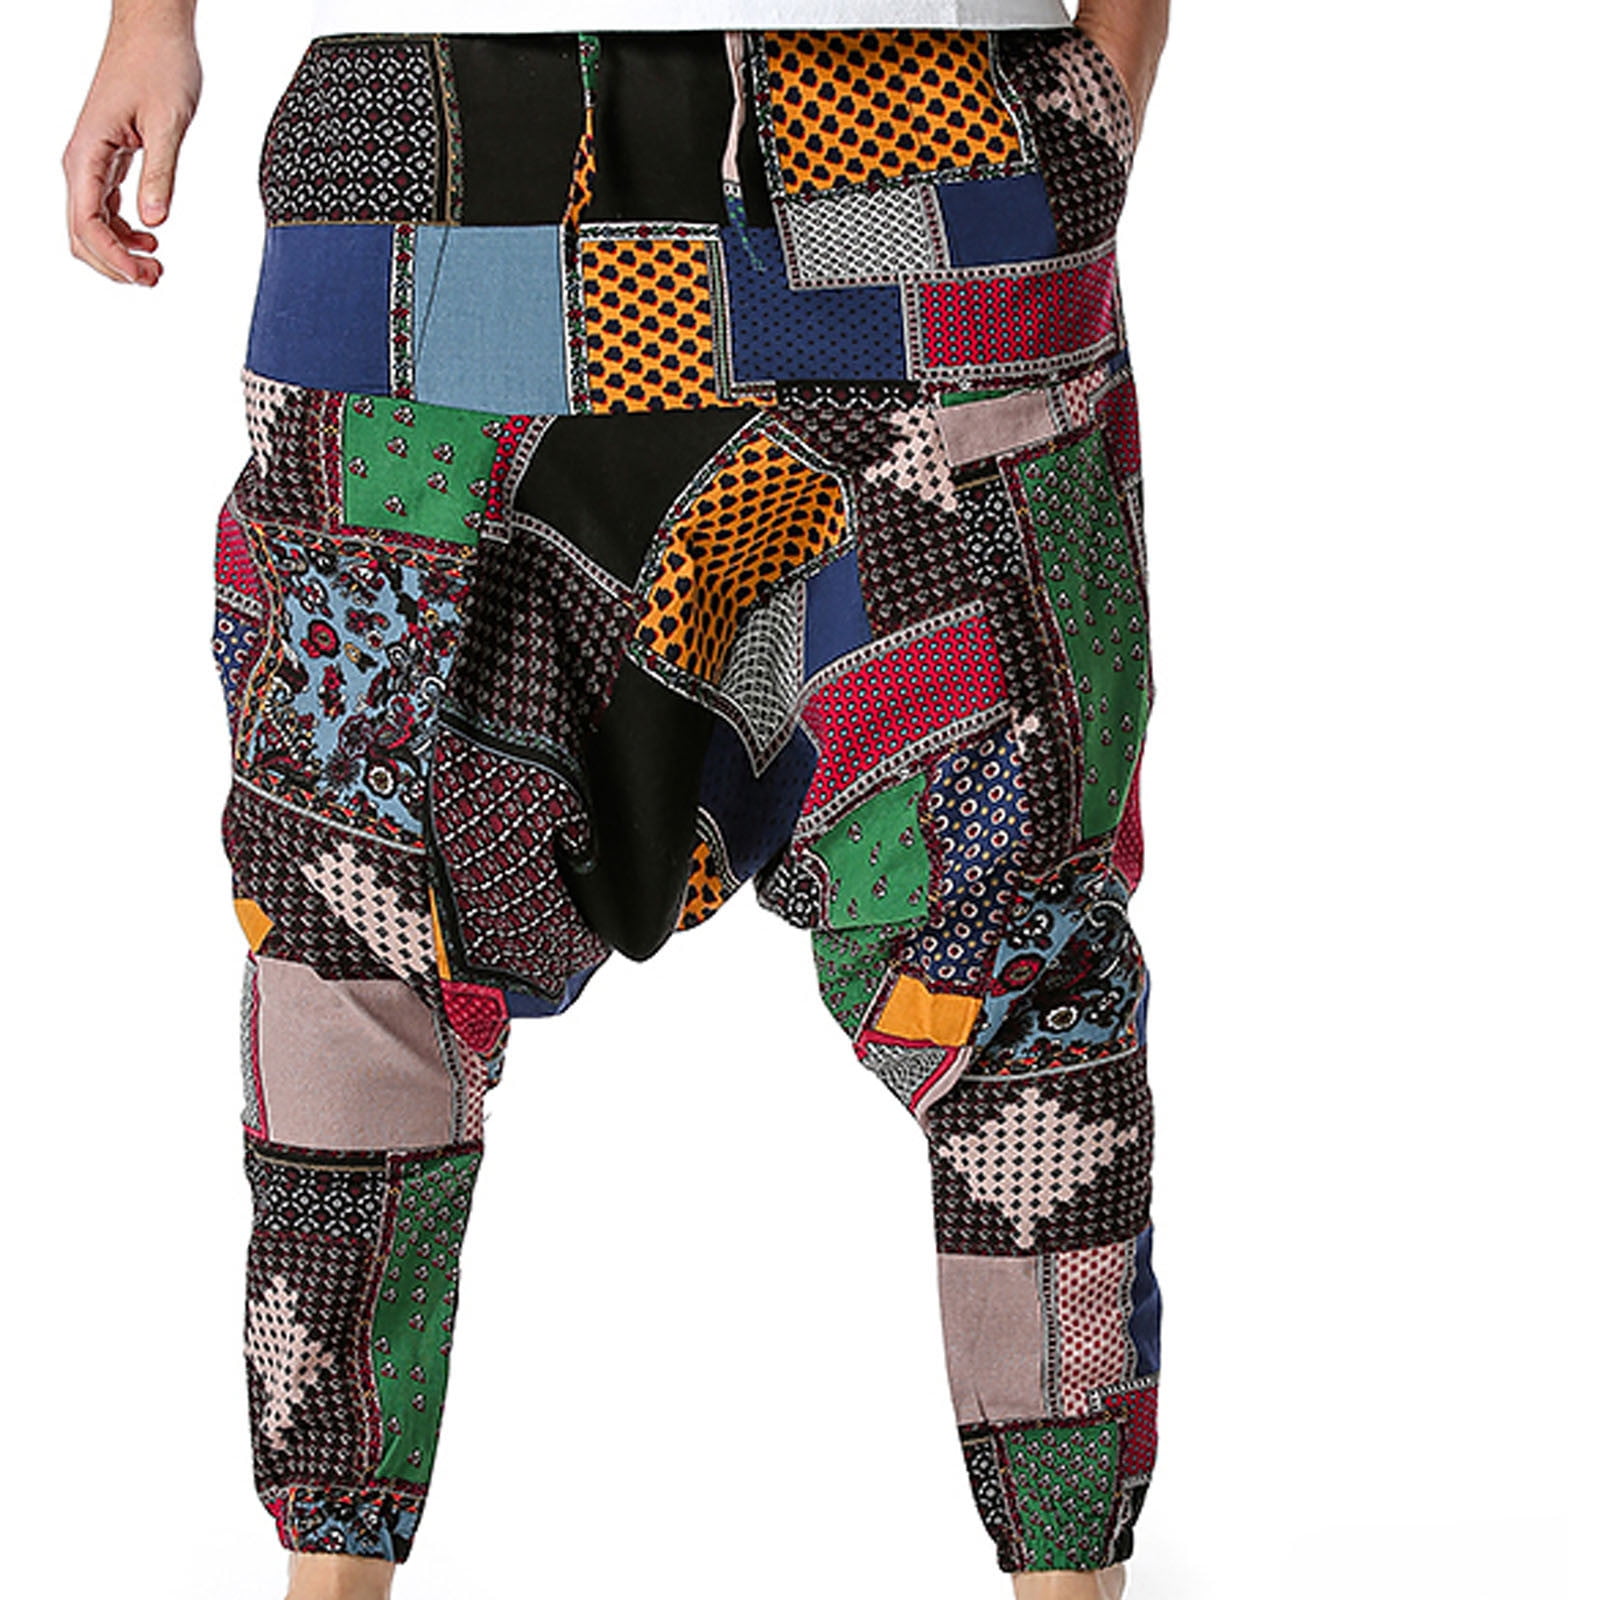 Zelos Men's Big & Tall Air Rush Pants, 4X - Yahoo Shopping